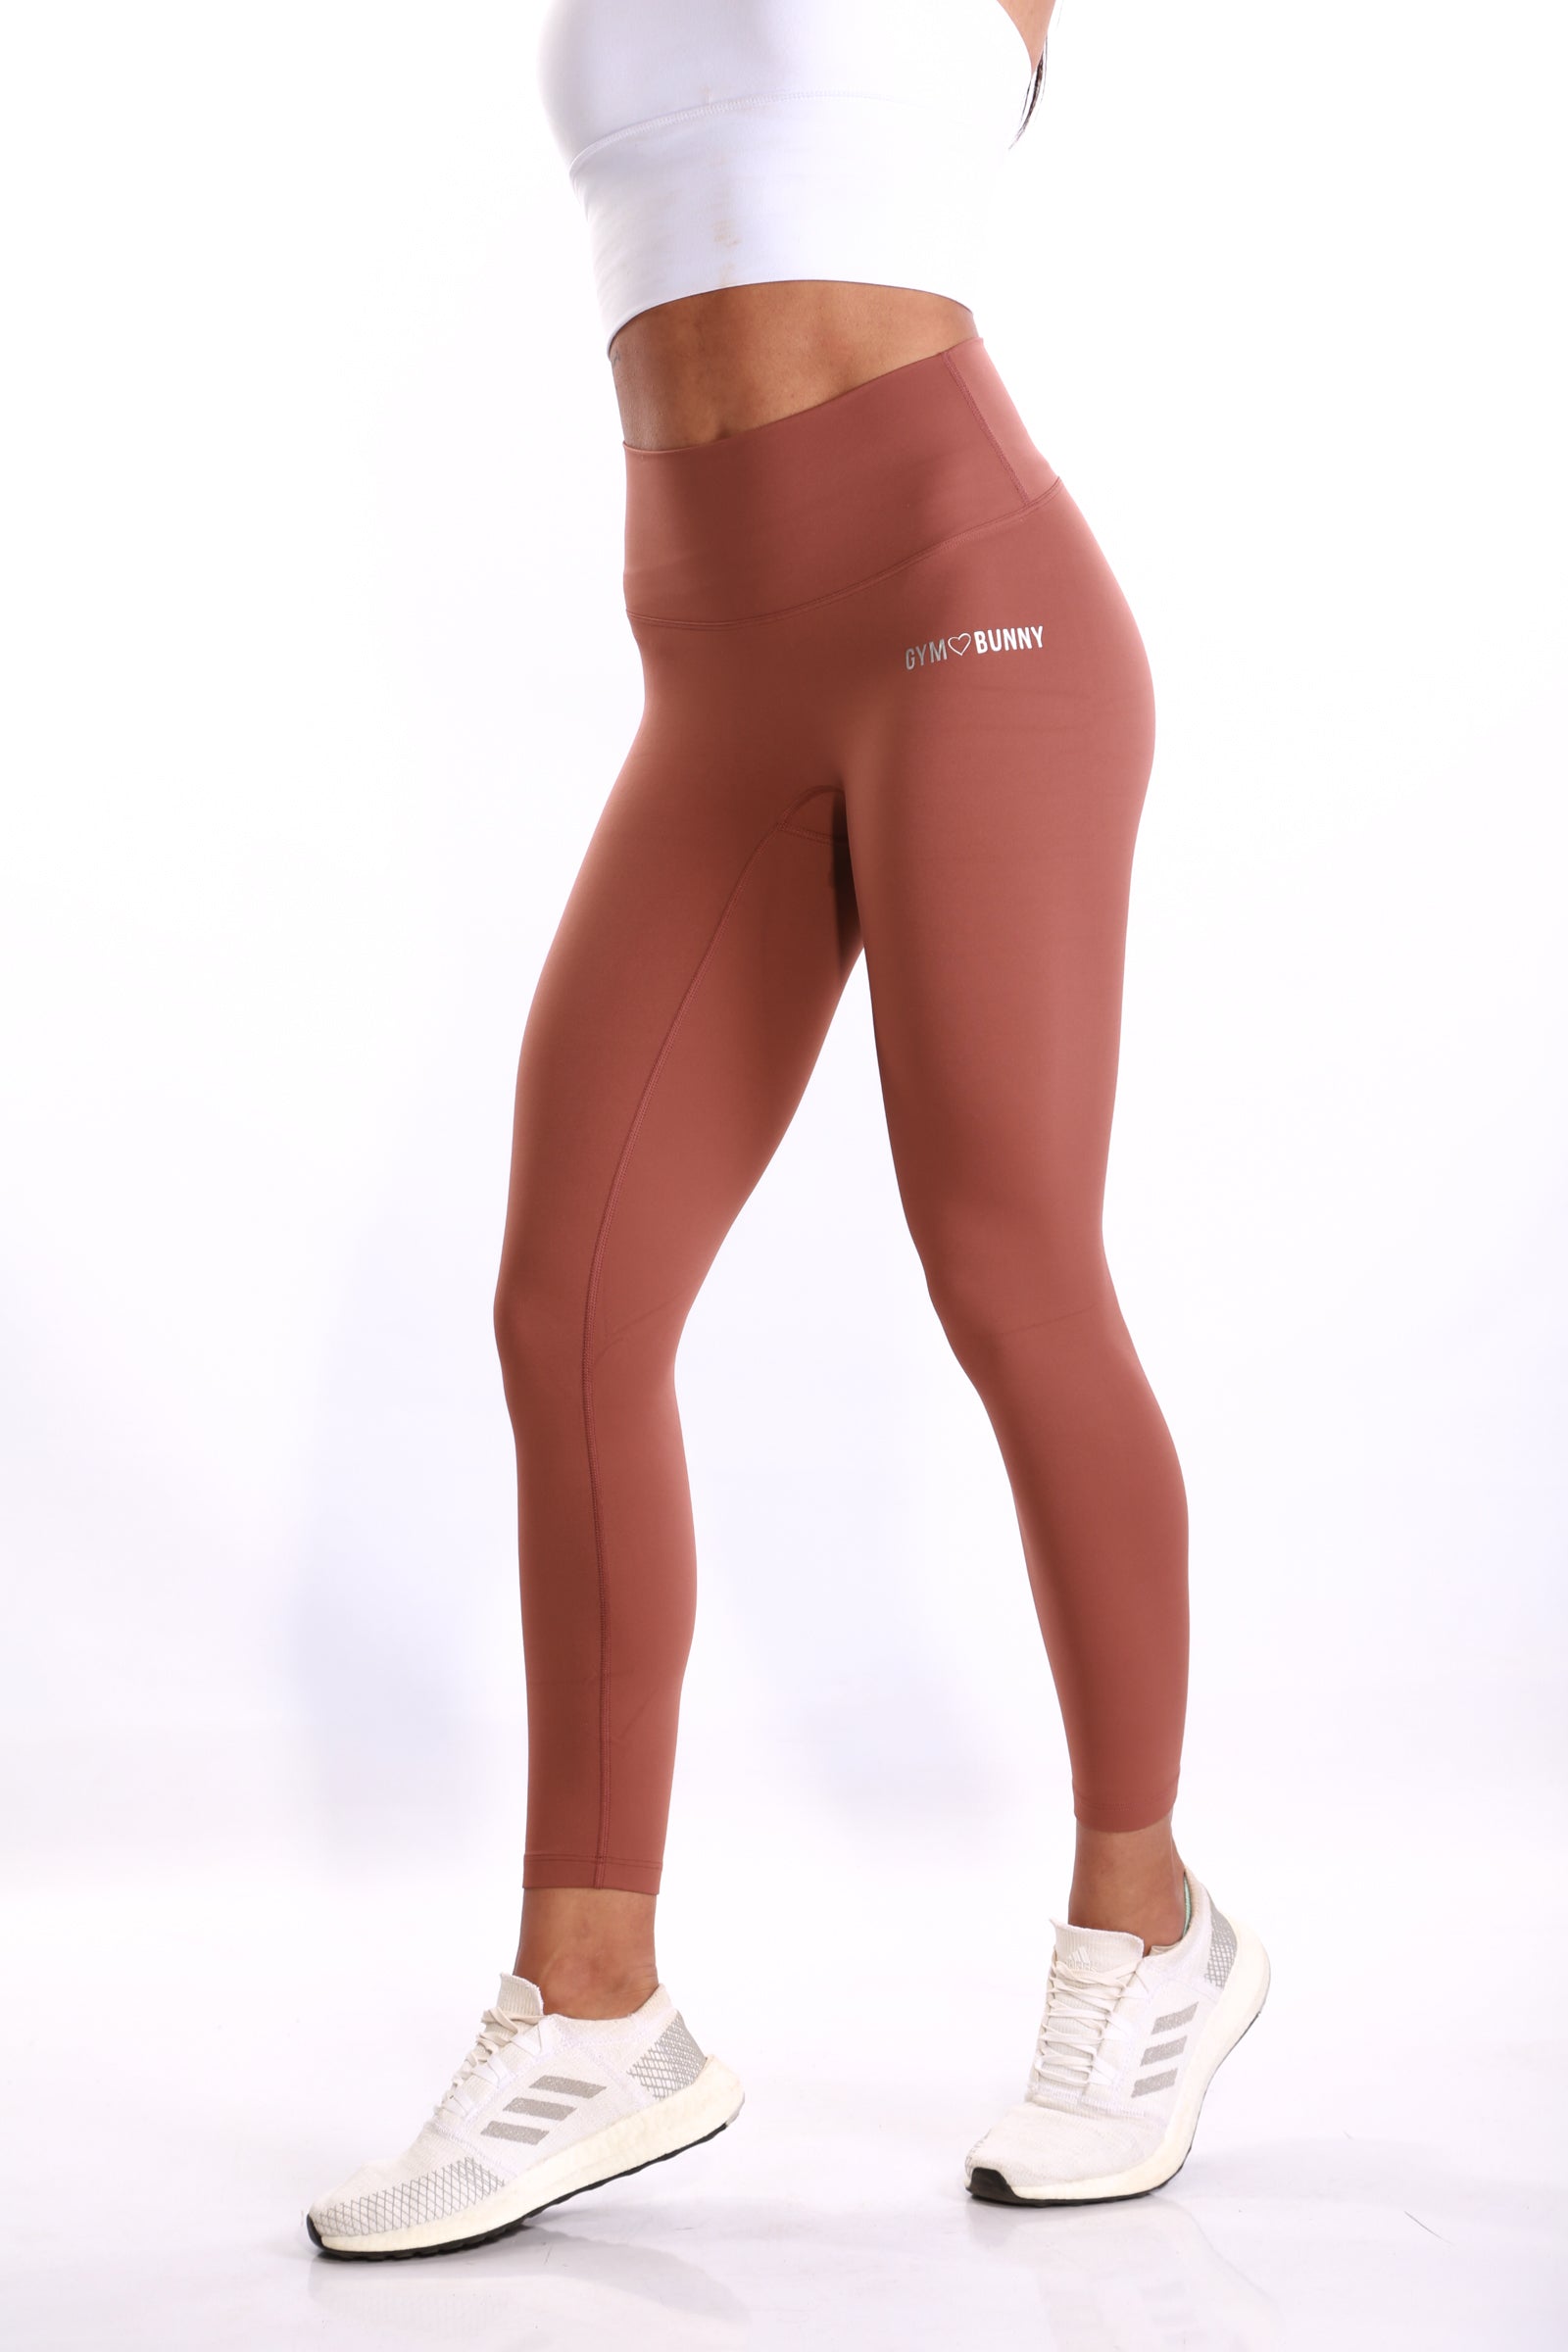 Image of Wondefit Gym Bunny Lulu  - Buttery  soft Yoga Pants- Brown